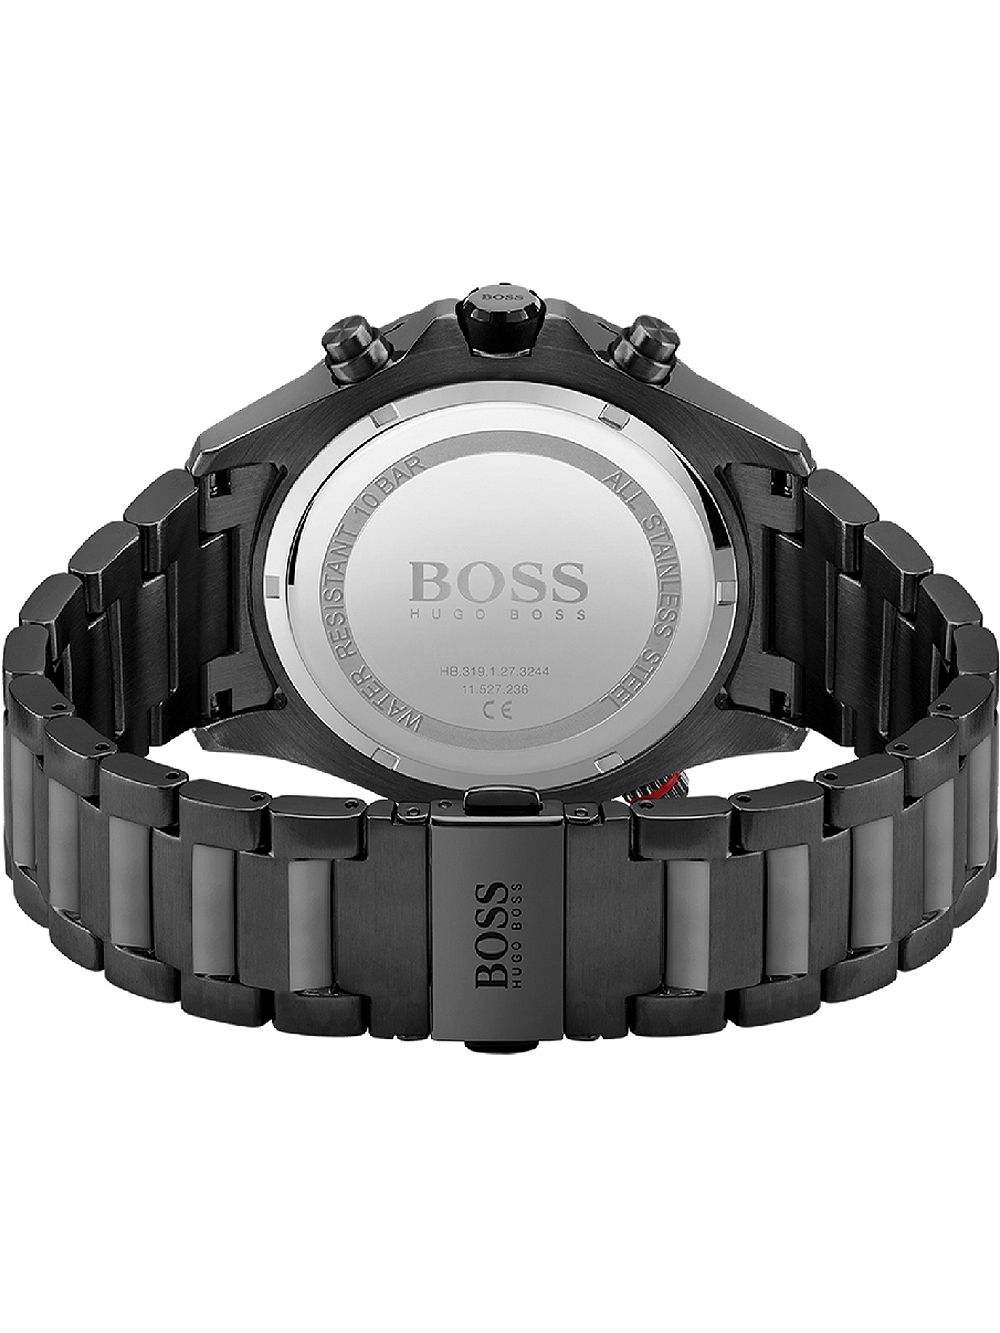 Hugo Boss Globetrotter Black Chronograph Men's Watch 1513825 - Big Daddy Watches #3